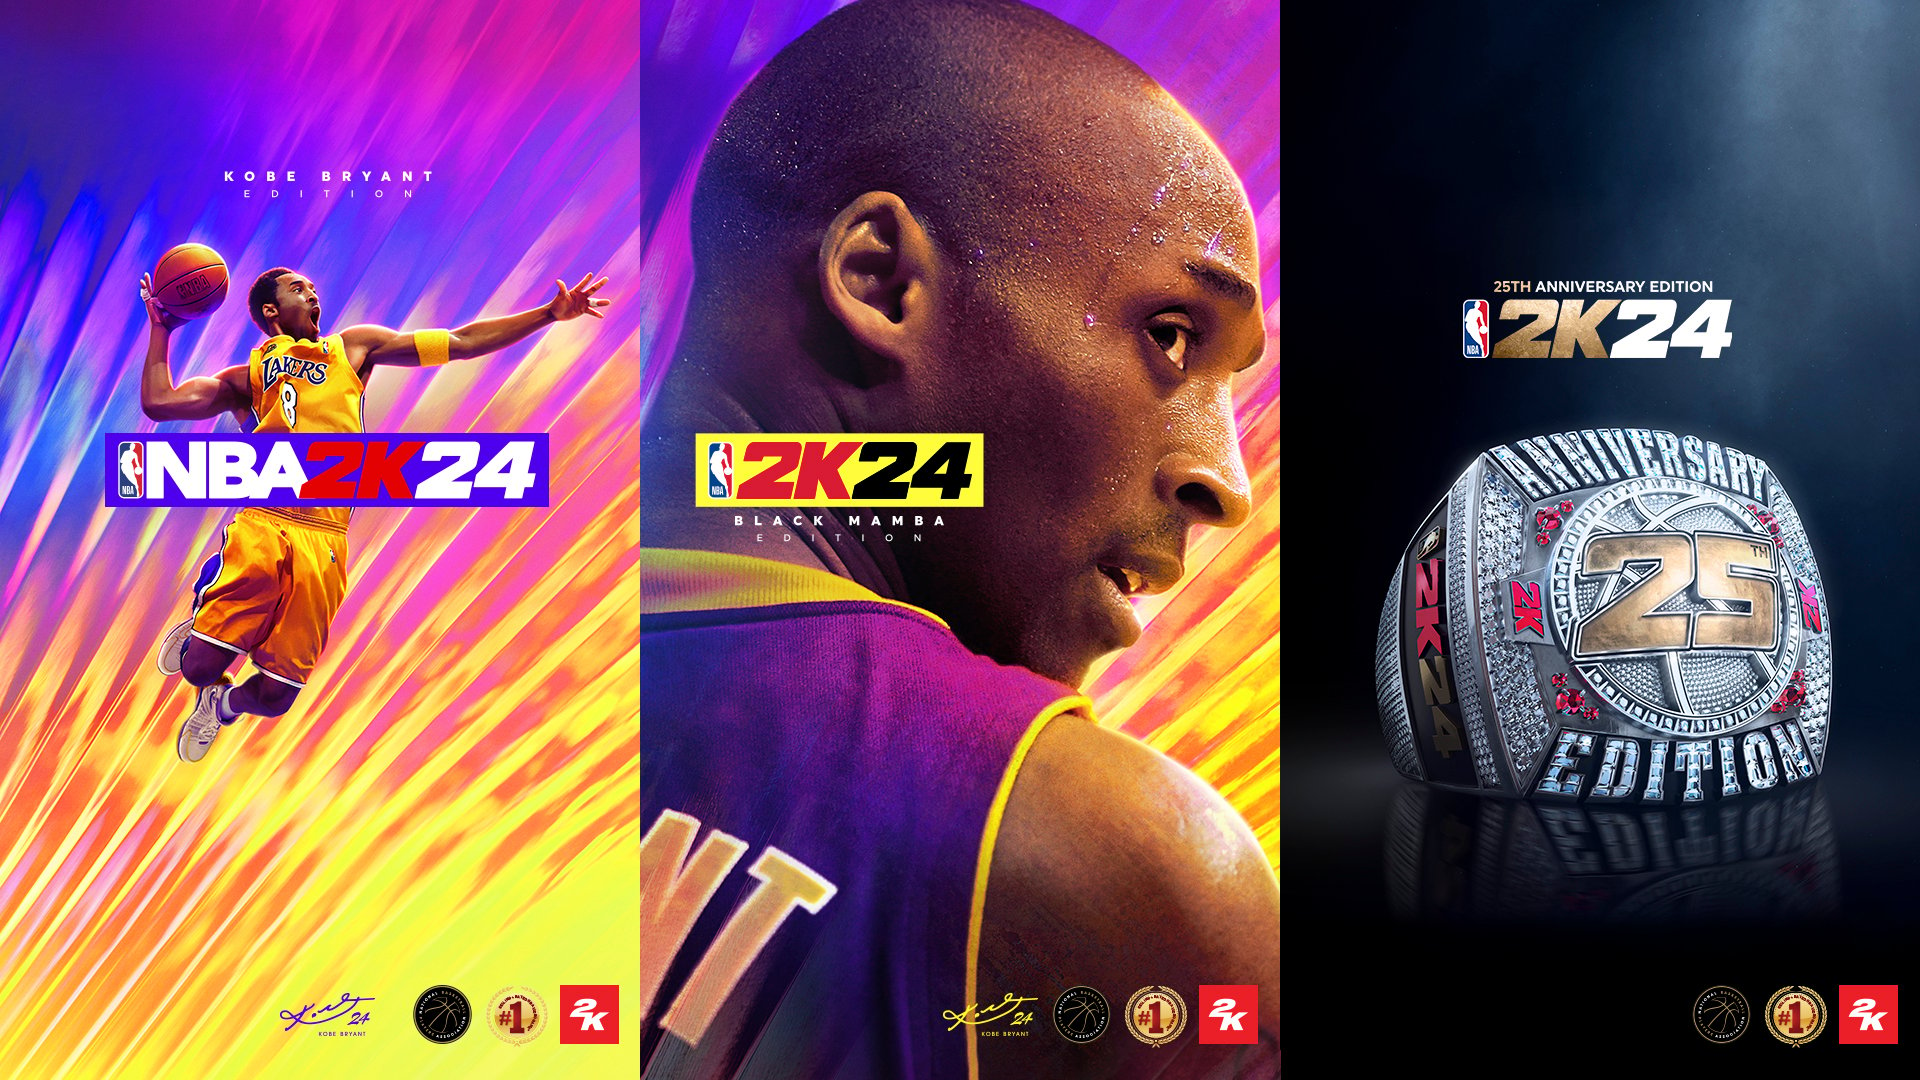 NBA 2K Mobile codes for December 2023